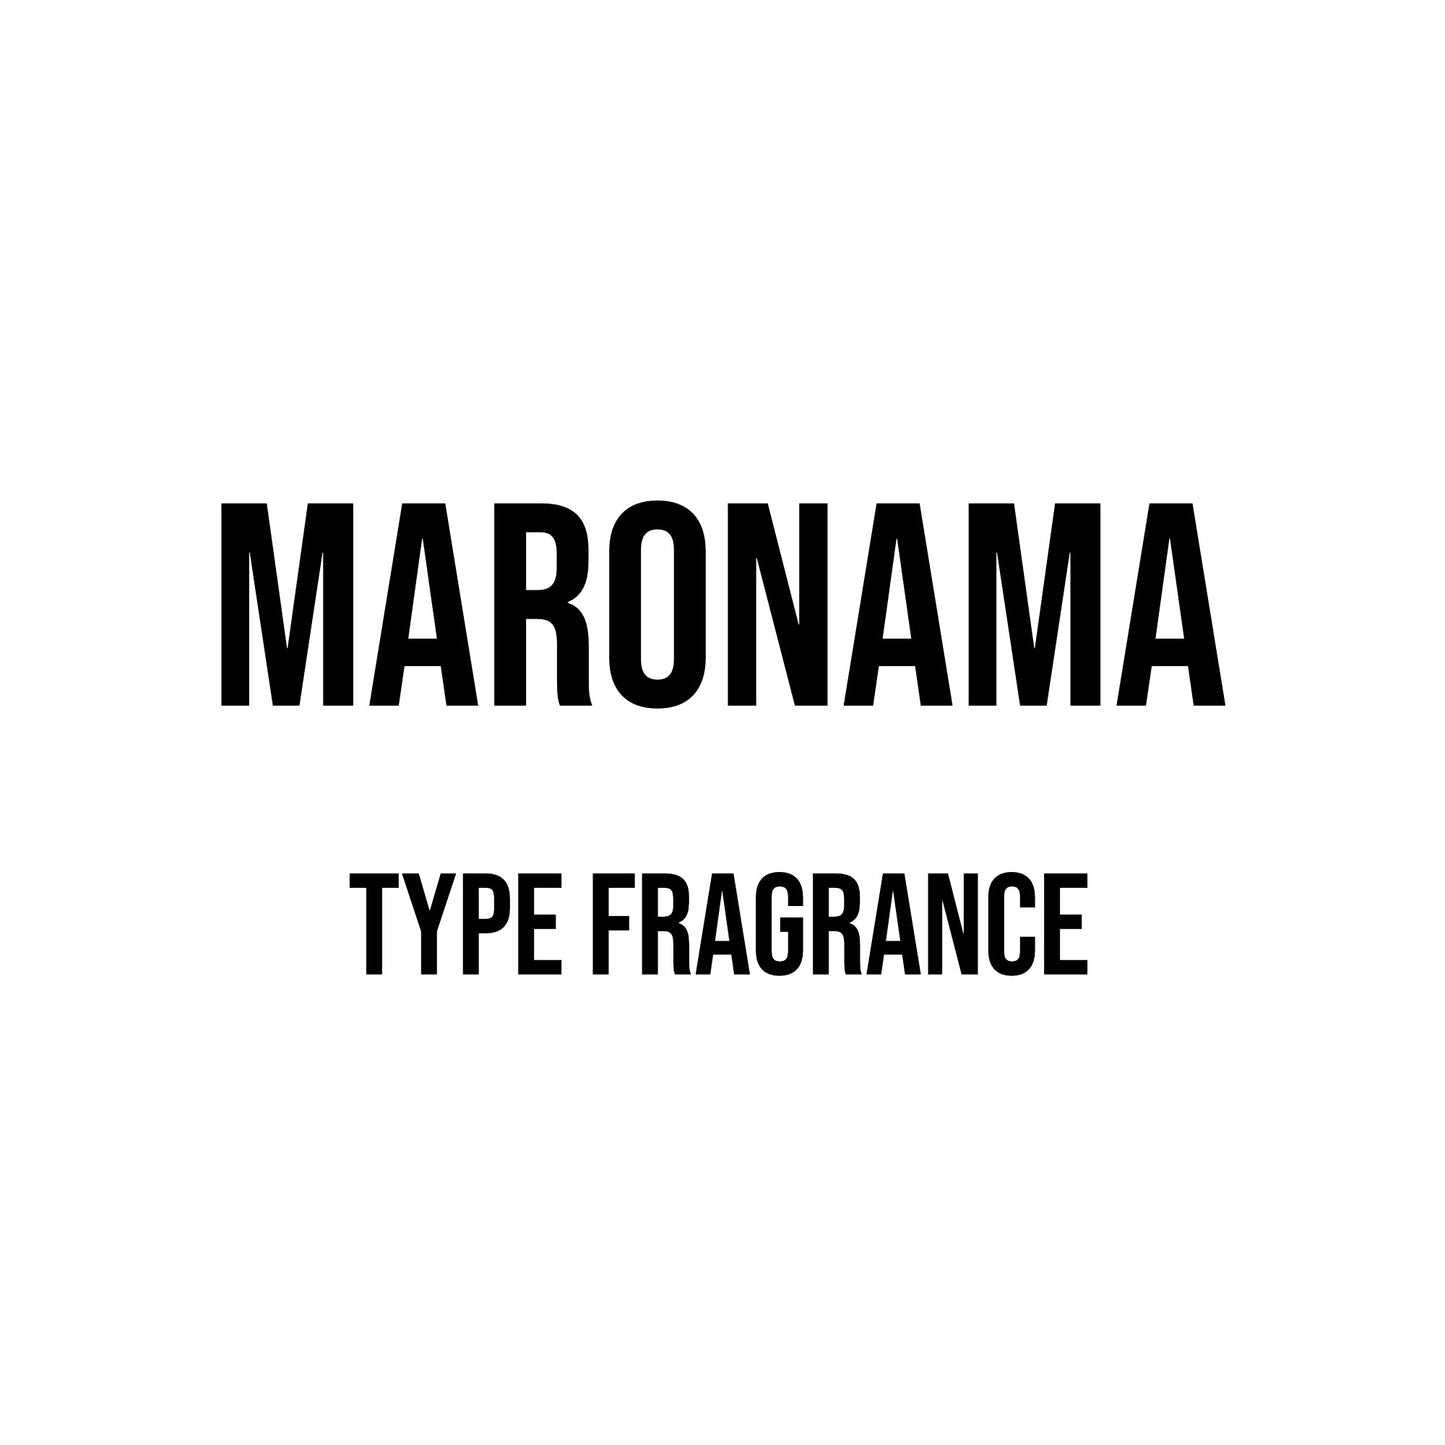 Maronama Type Fragrance